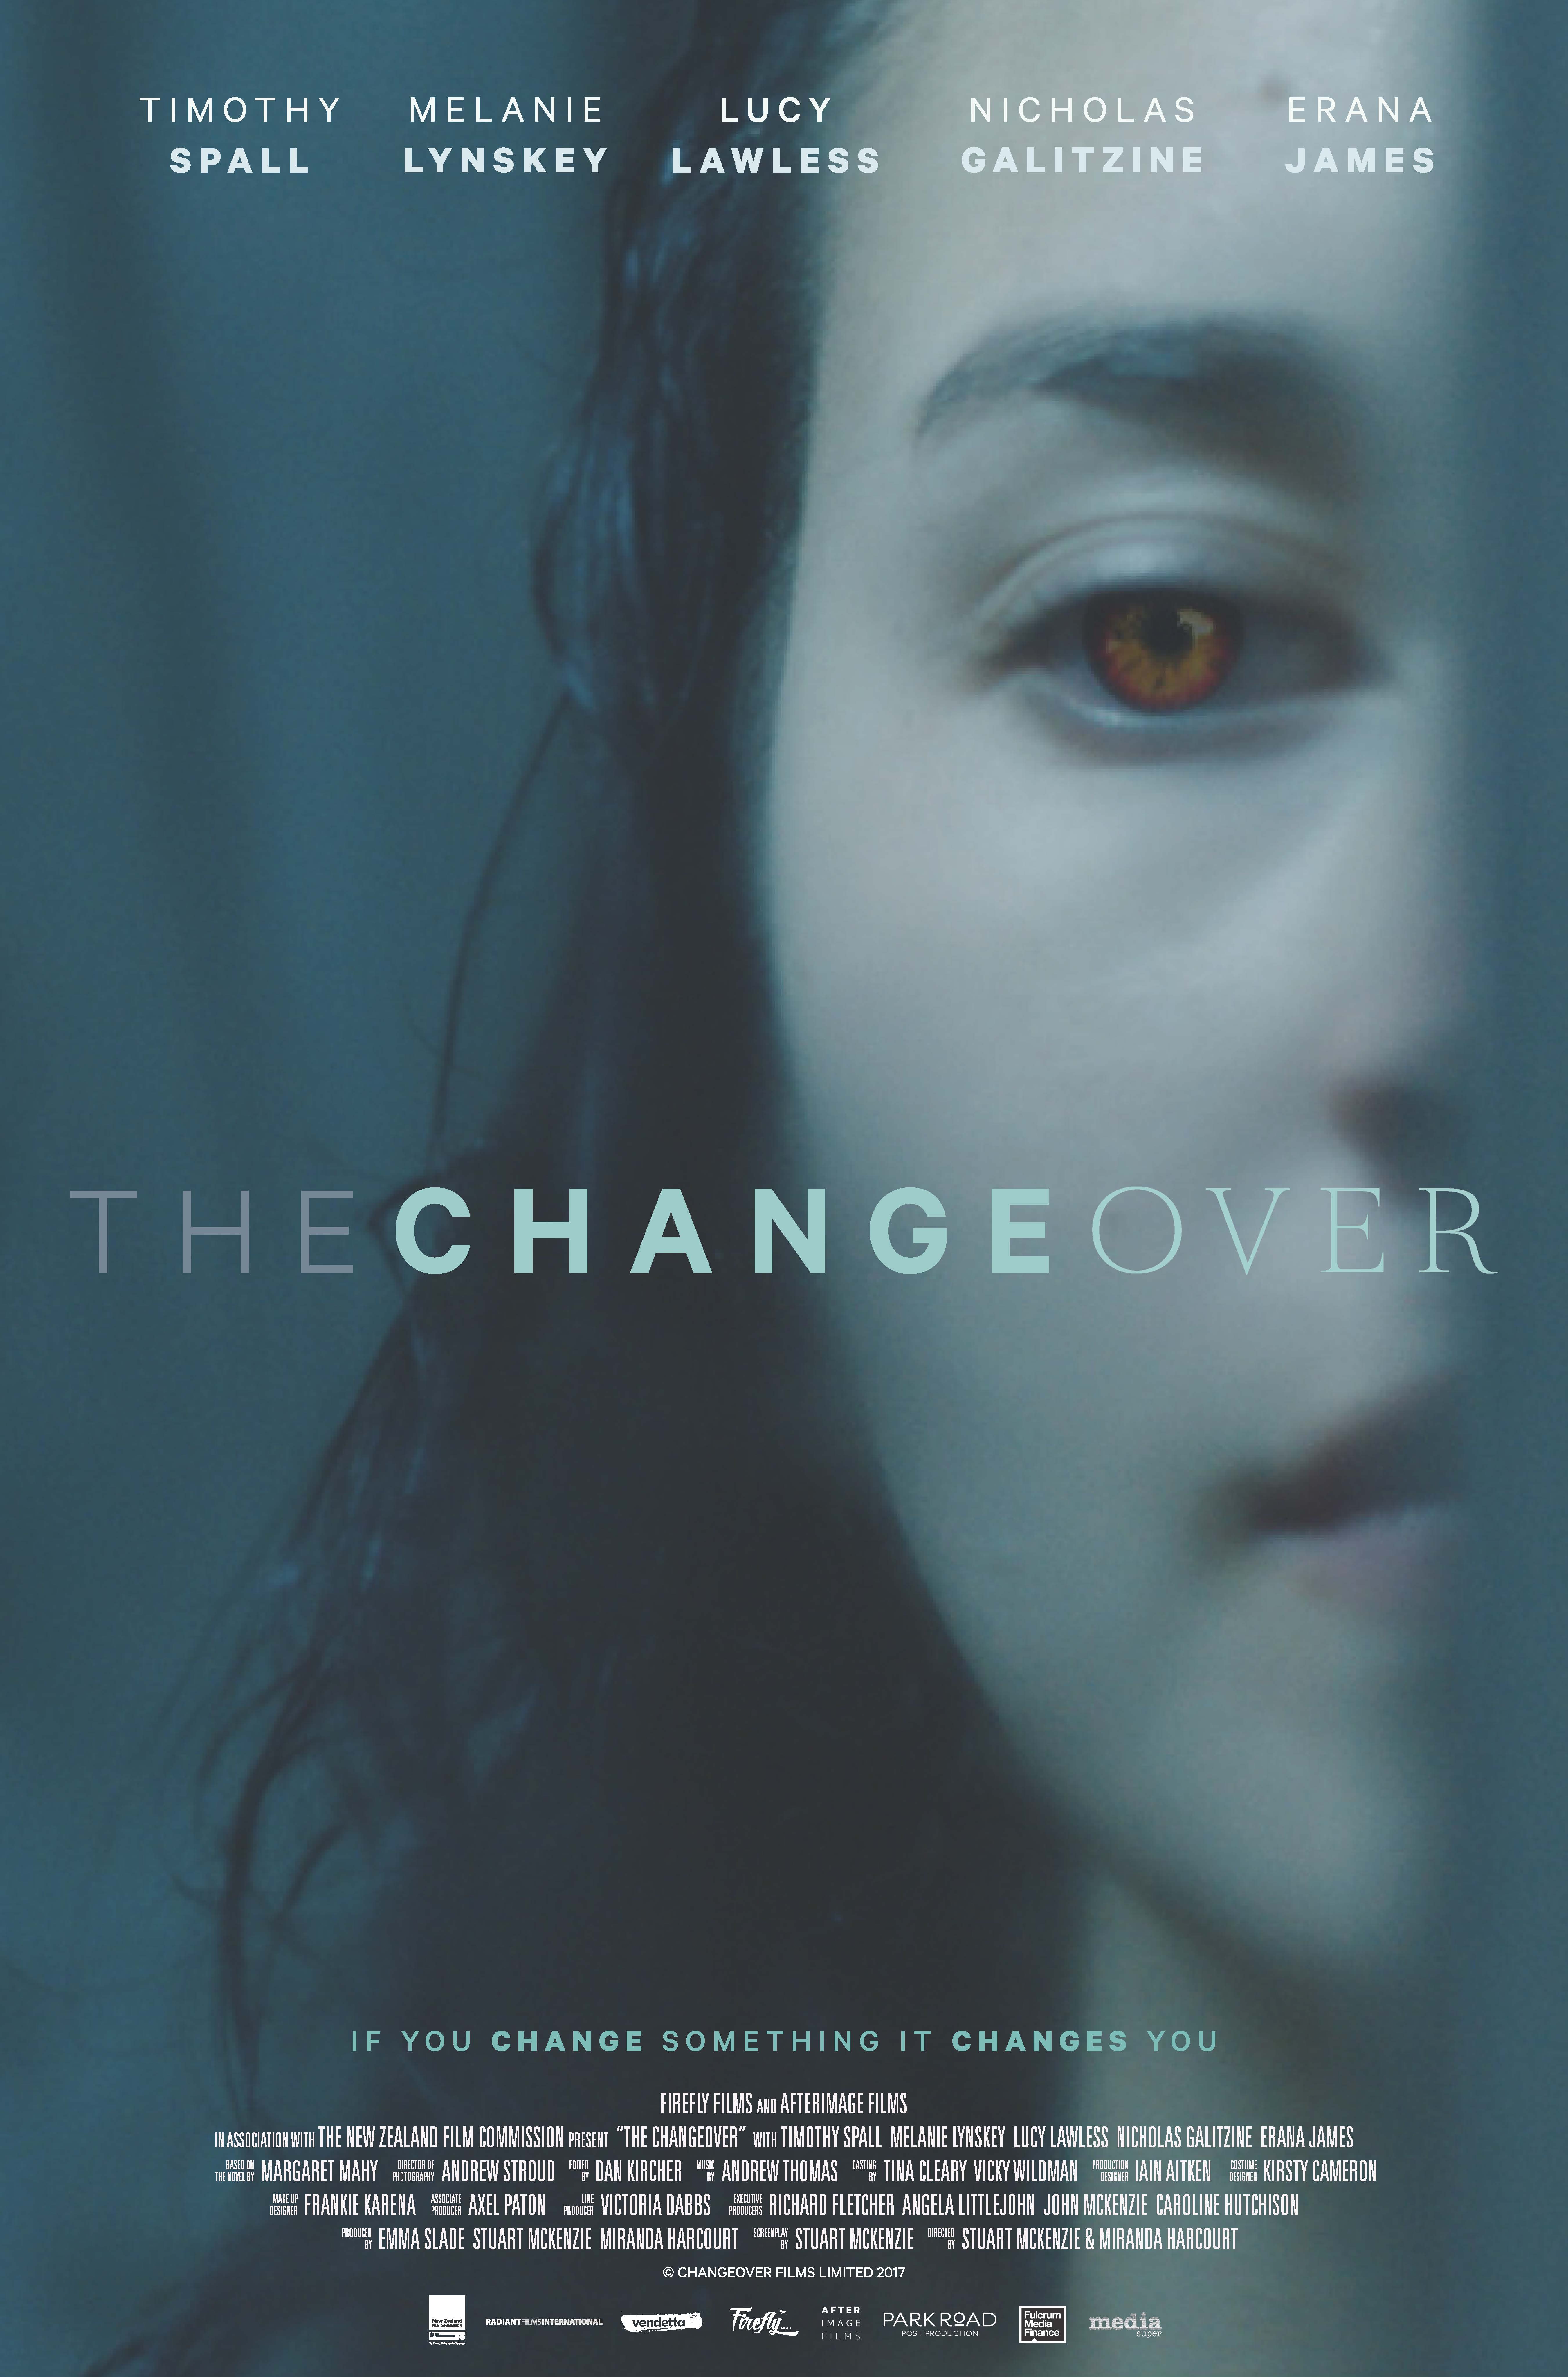 Nonton film The Changeover layarkaca21 indoxx1 ganool online streaming terbaru